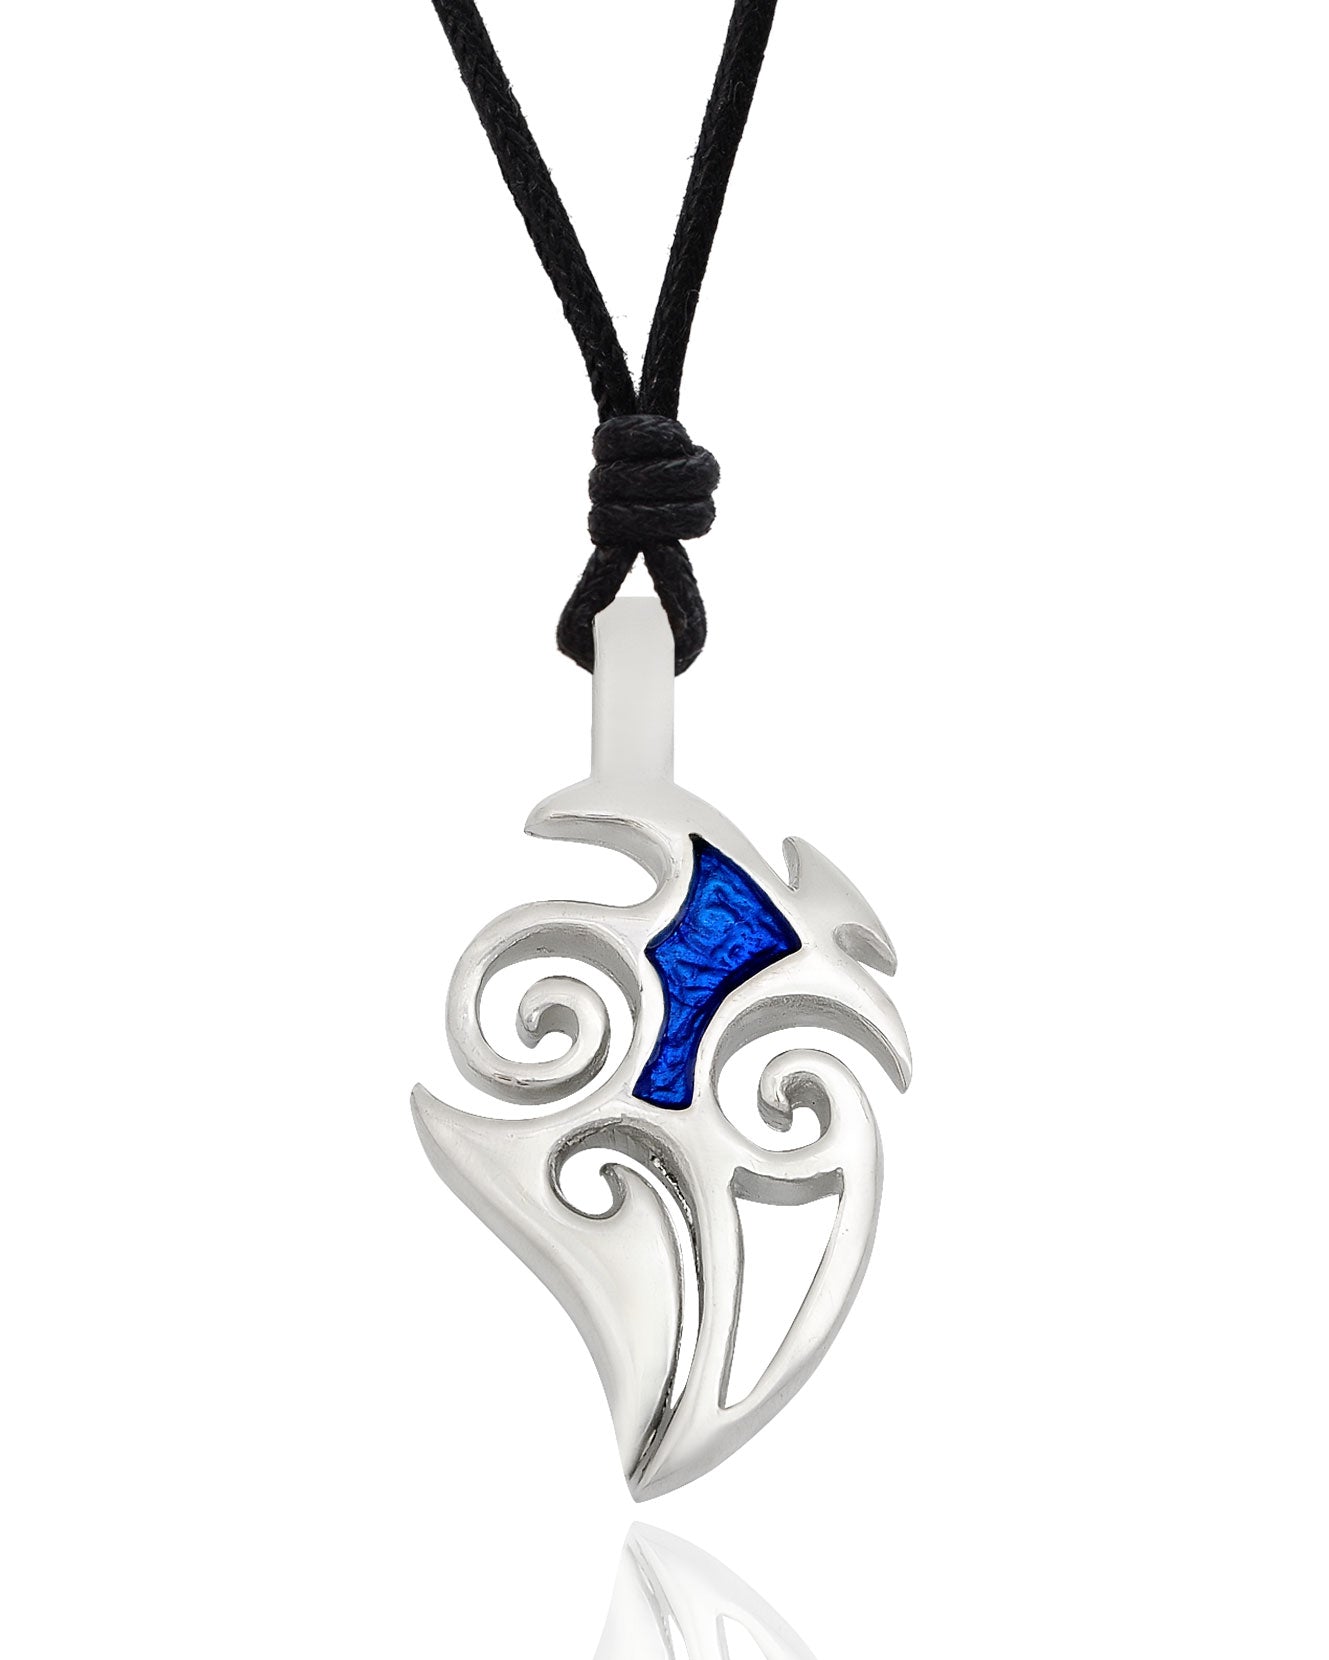 Maori Tatoo Design Silver Pewter Charm Necklace Pendant Jewelry